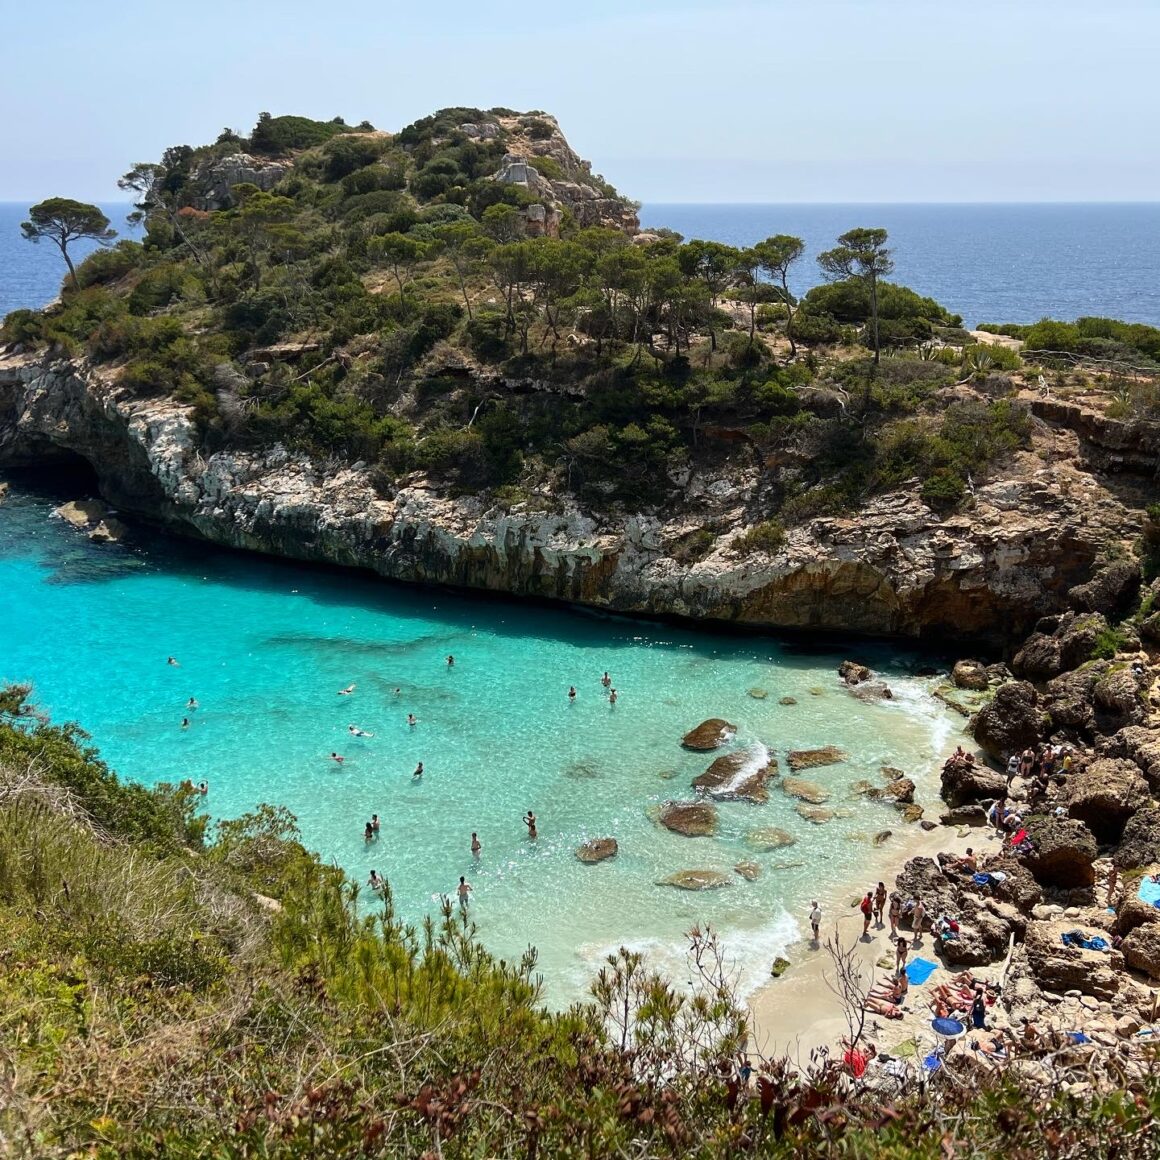 Calo des Moro, one of the most beautiful beaches in Mallorca.